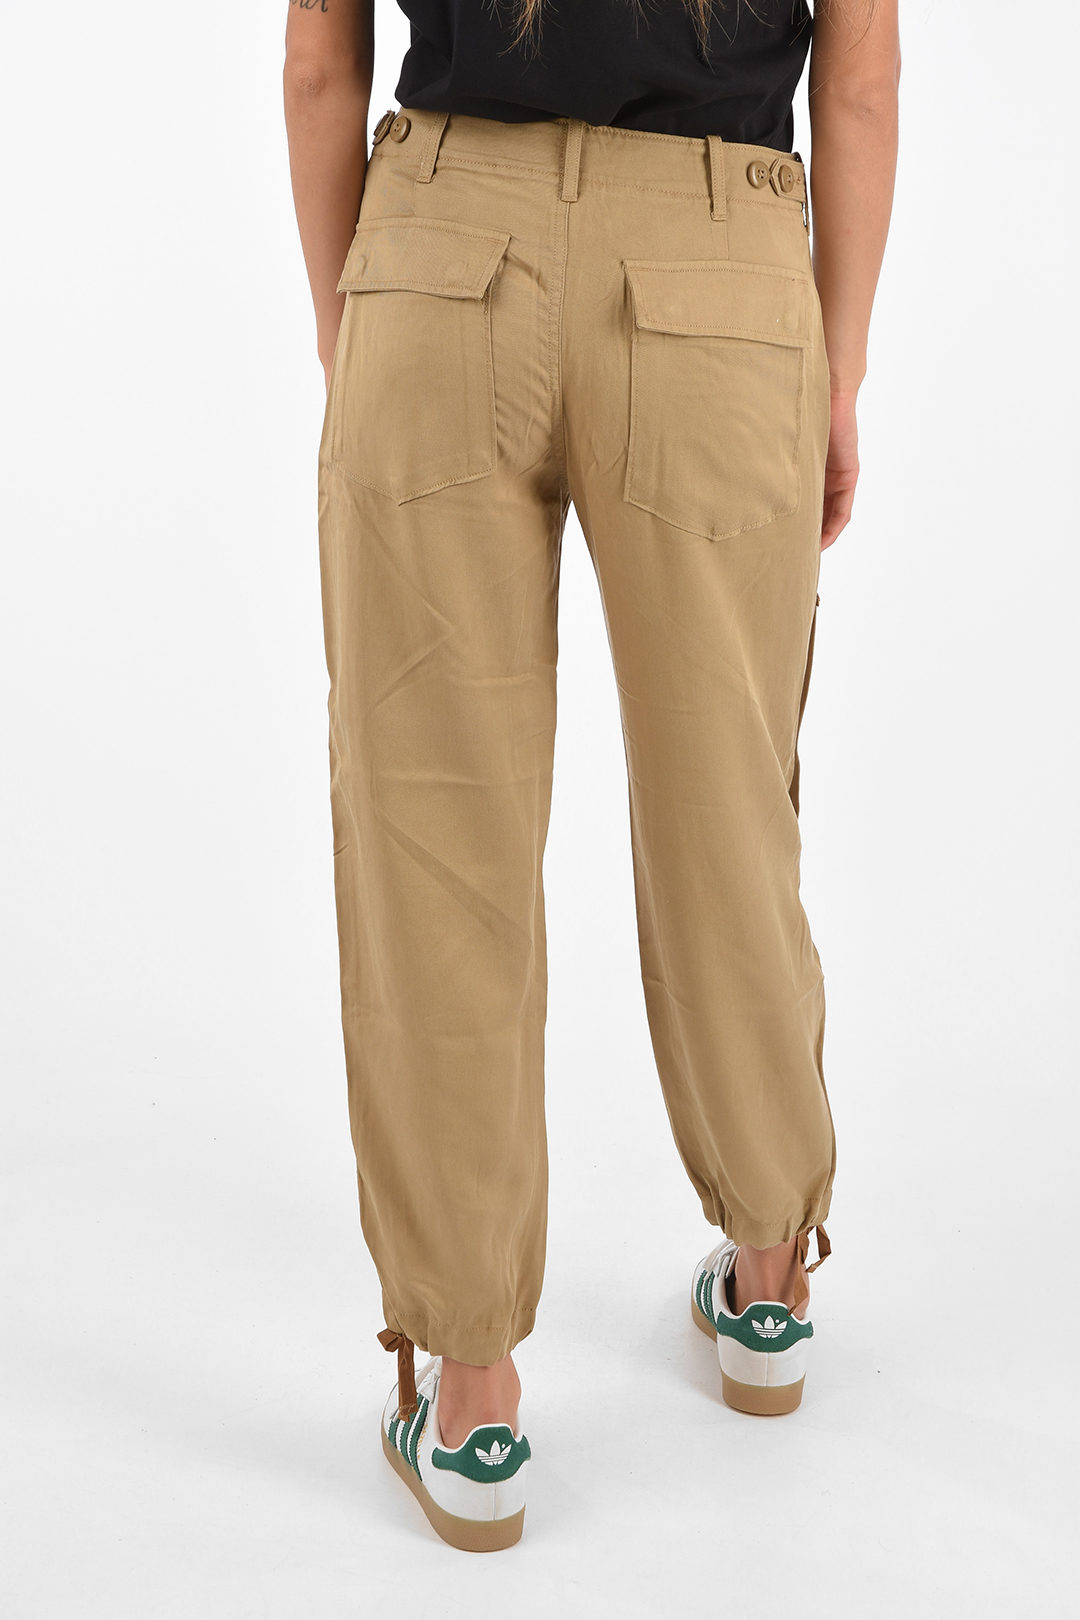 Ralph Lauren Polo Jeans Co. Cuffed Capri Pants conbral.com.br